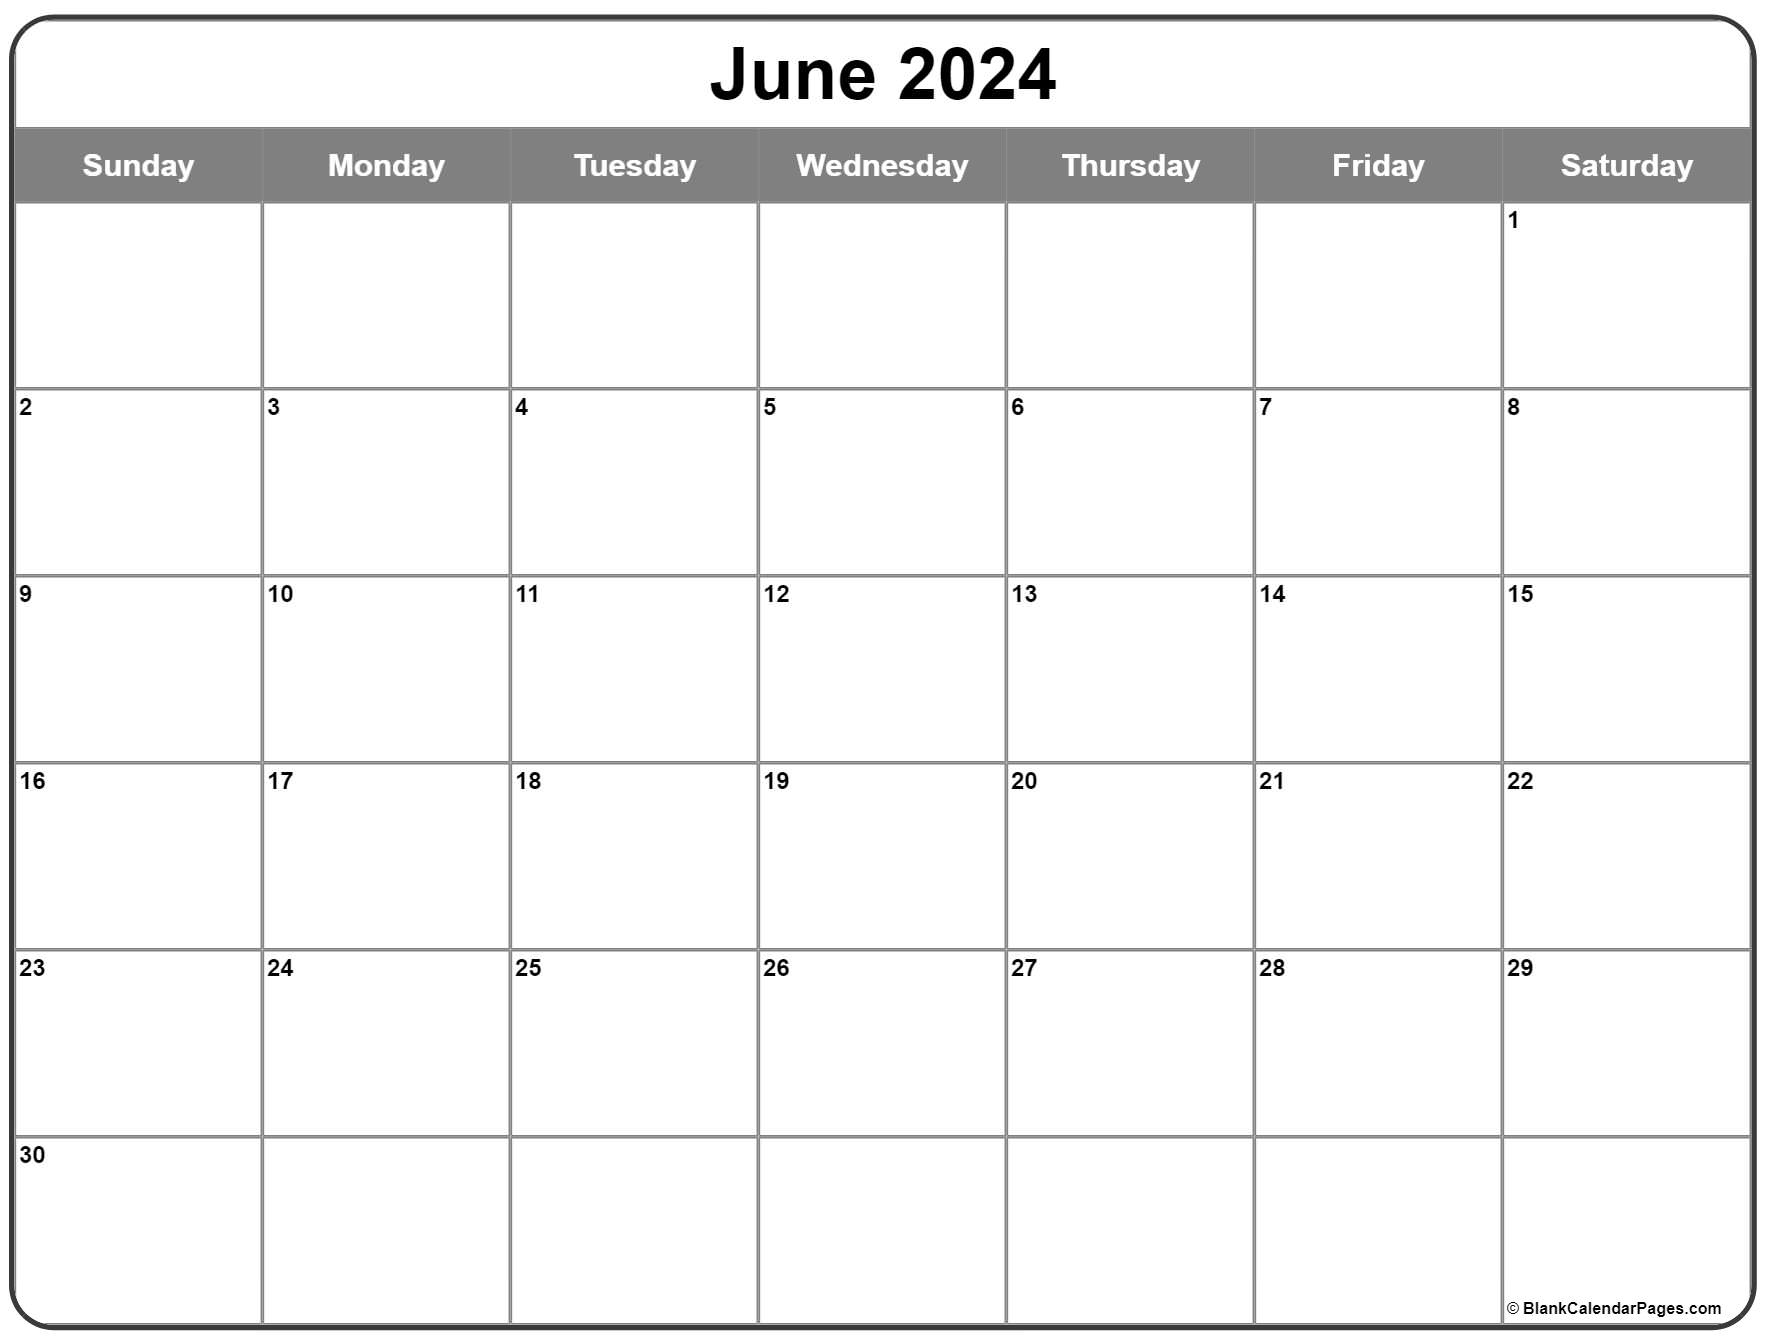 June 2024 Calendar Free Printable Calendar | Free Printable 2024 Calendar June